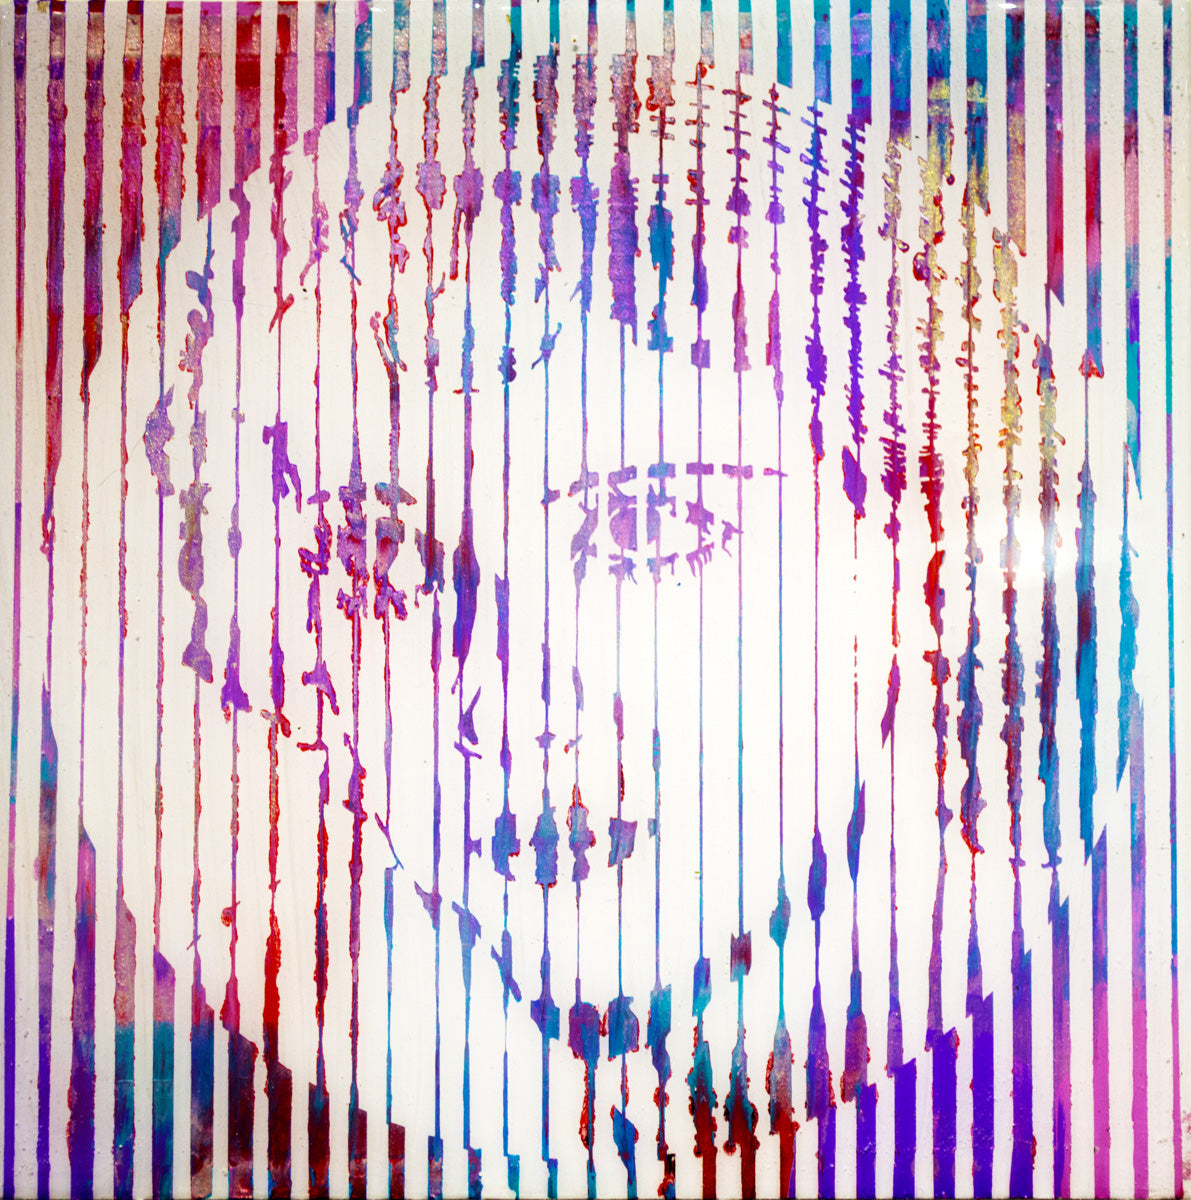 sean christopher ward artwork wichita kansas acrylic painting vivid vibrant ict op art optical illusion contemporary extroidanary psychedelic trippy pop